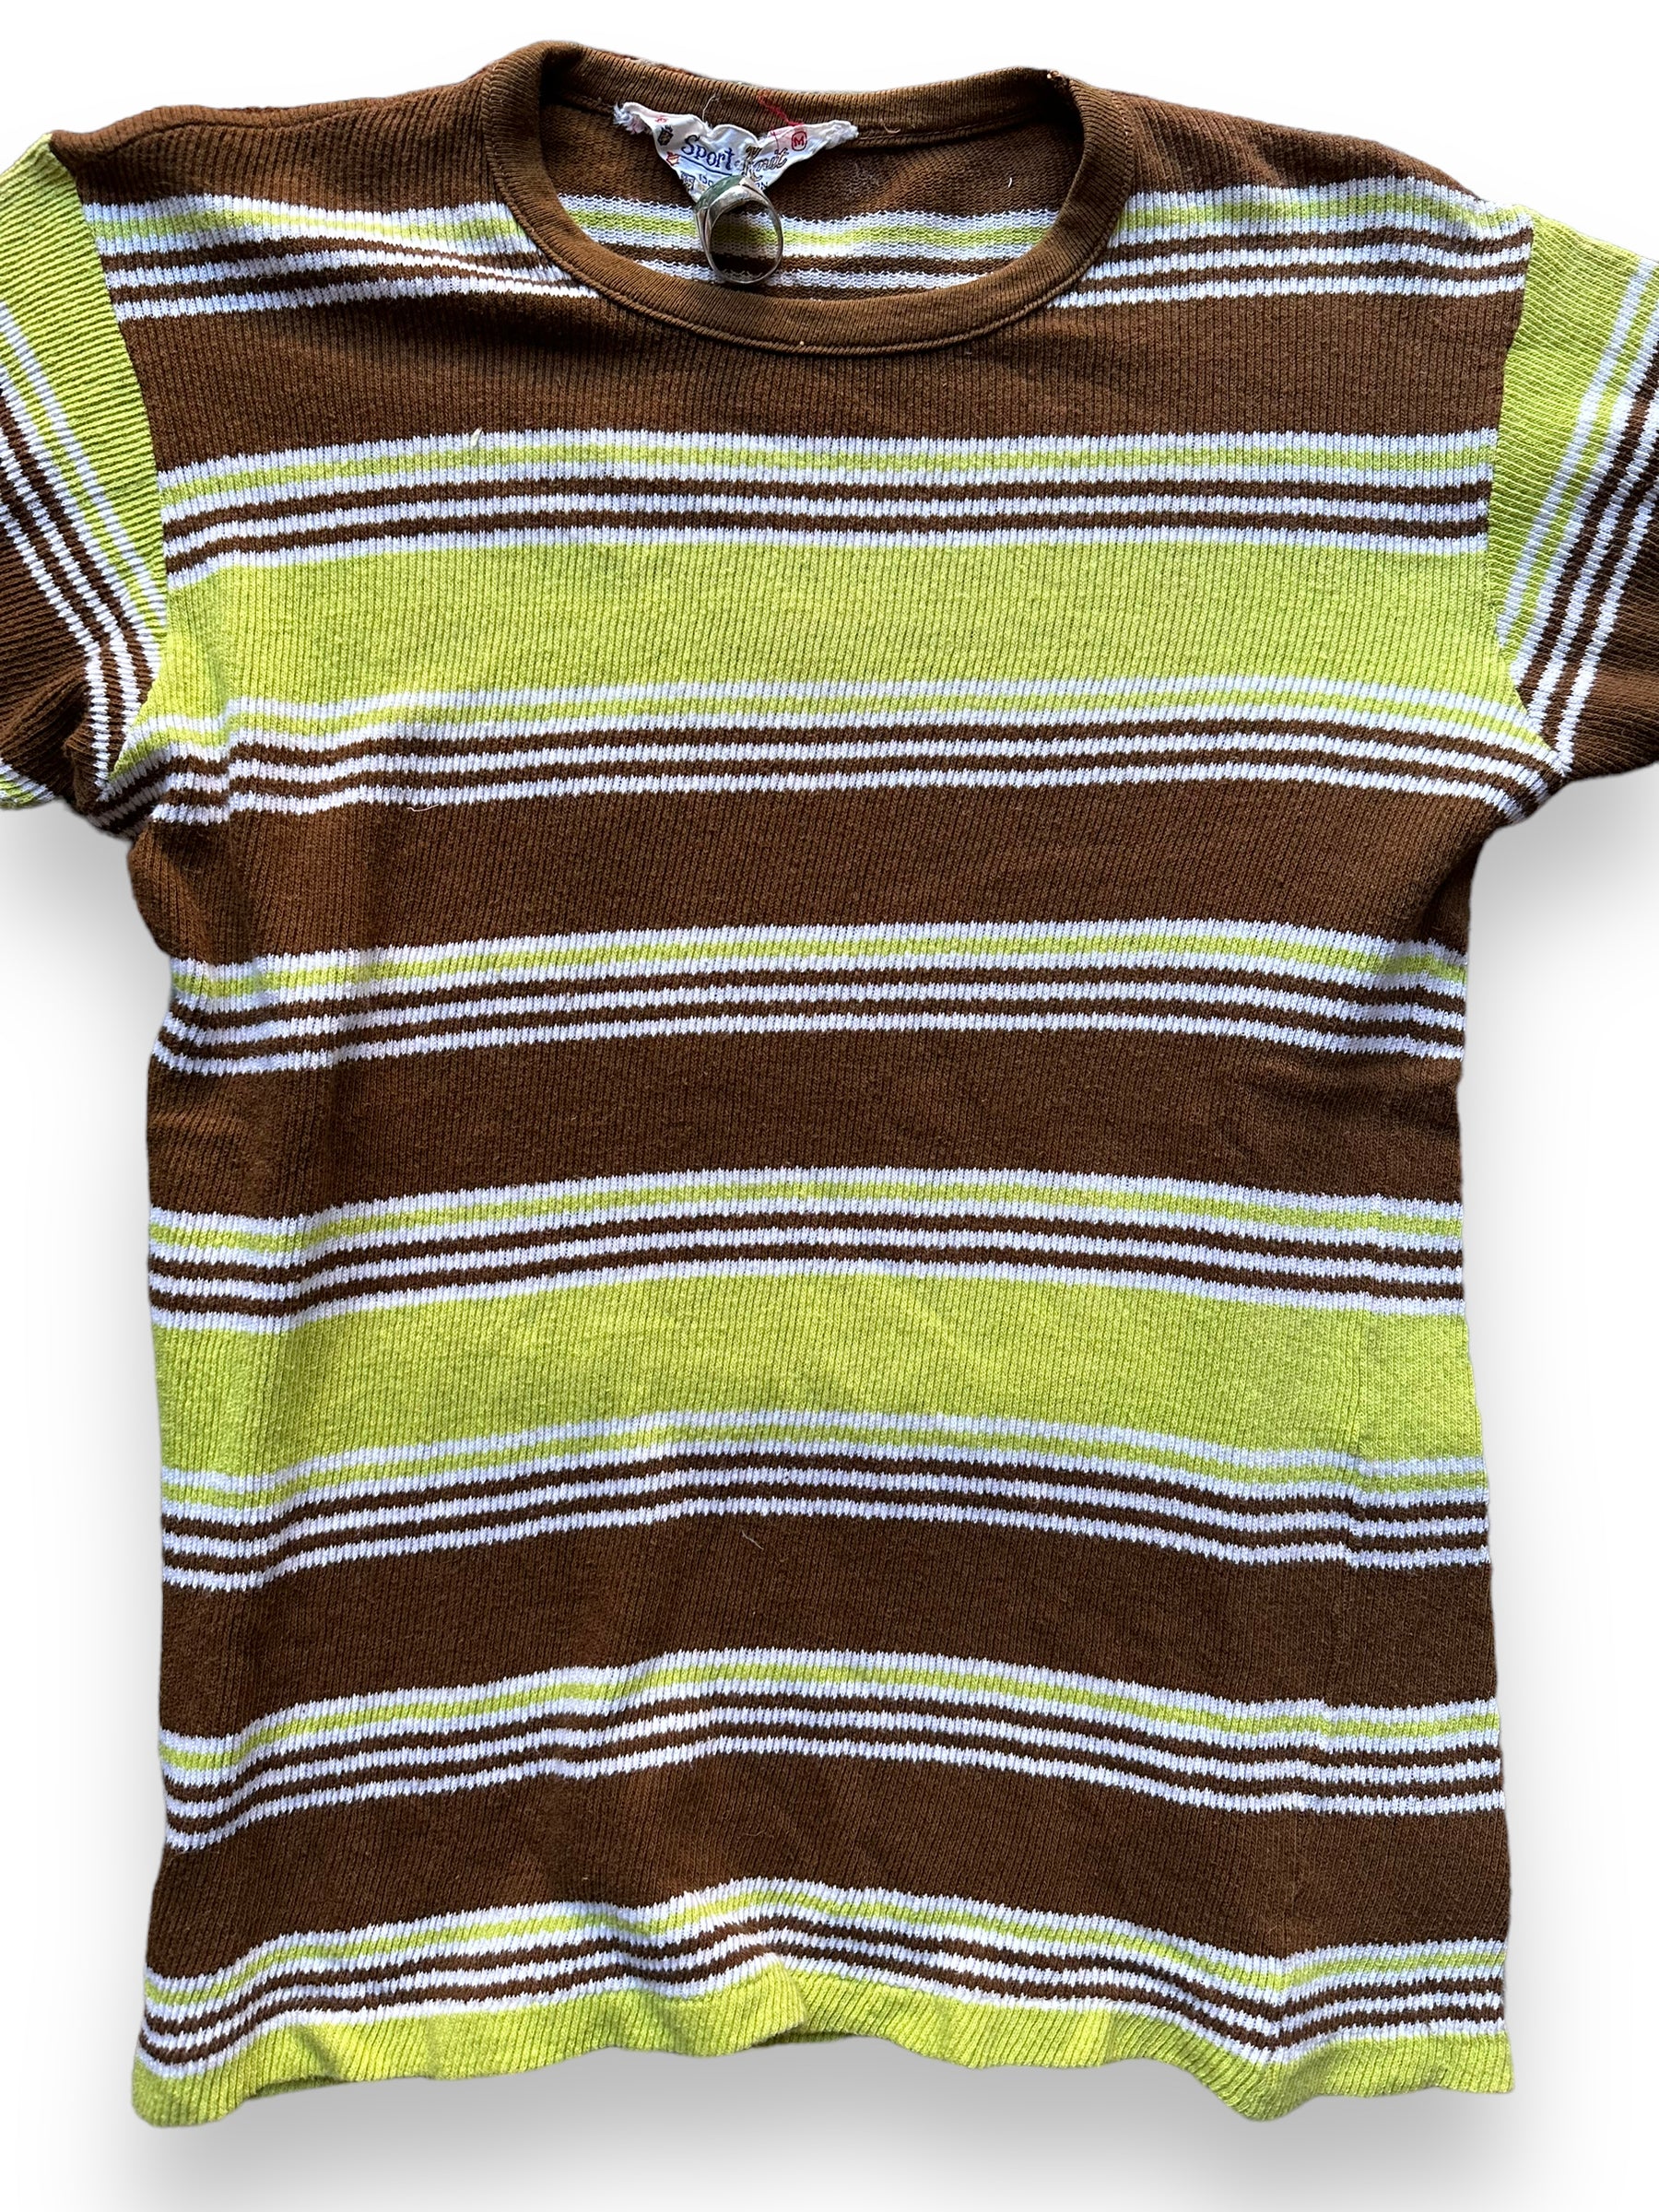 Front Detail onVintage Sears Sport Knit Striped Cotton Top SZ M | Vintage Striped Shirts Seattle | Barn Owl Vintage Tees Seattle